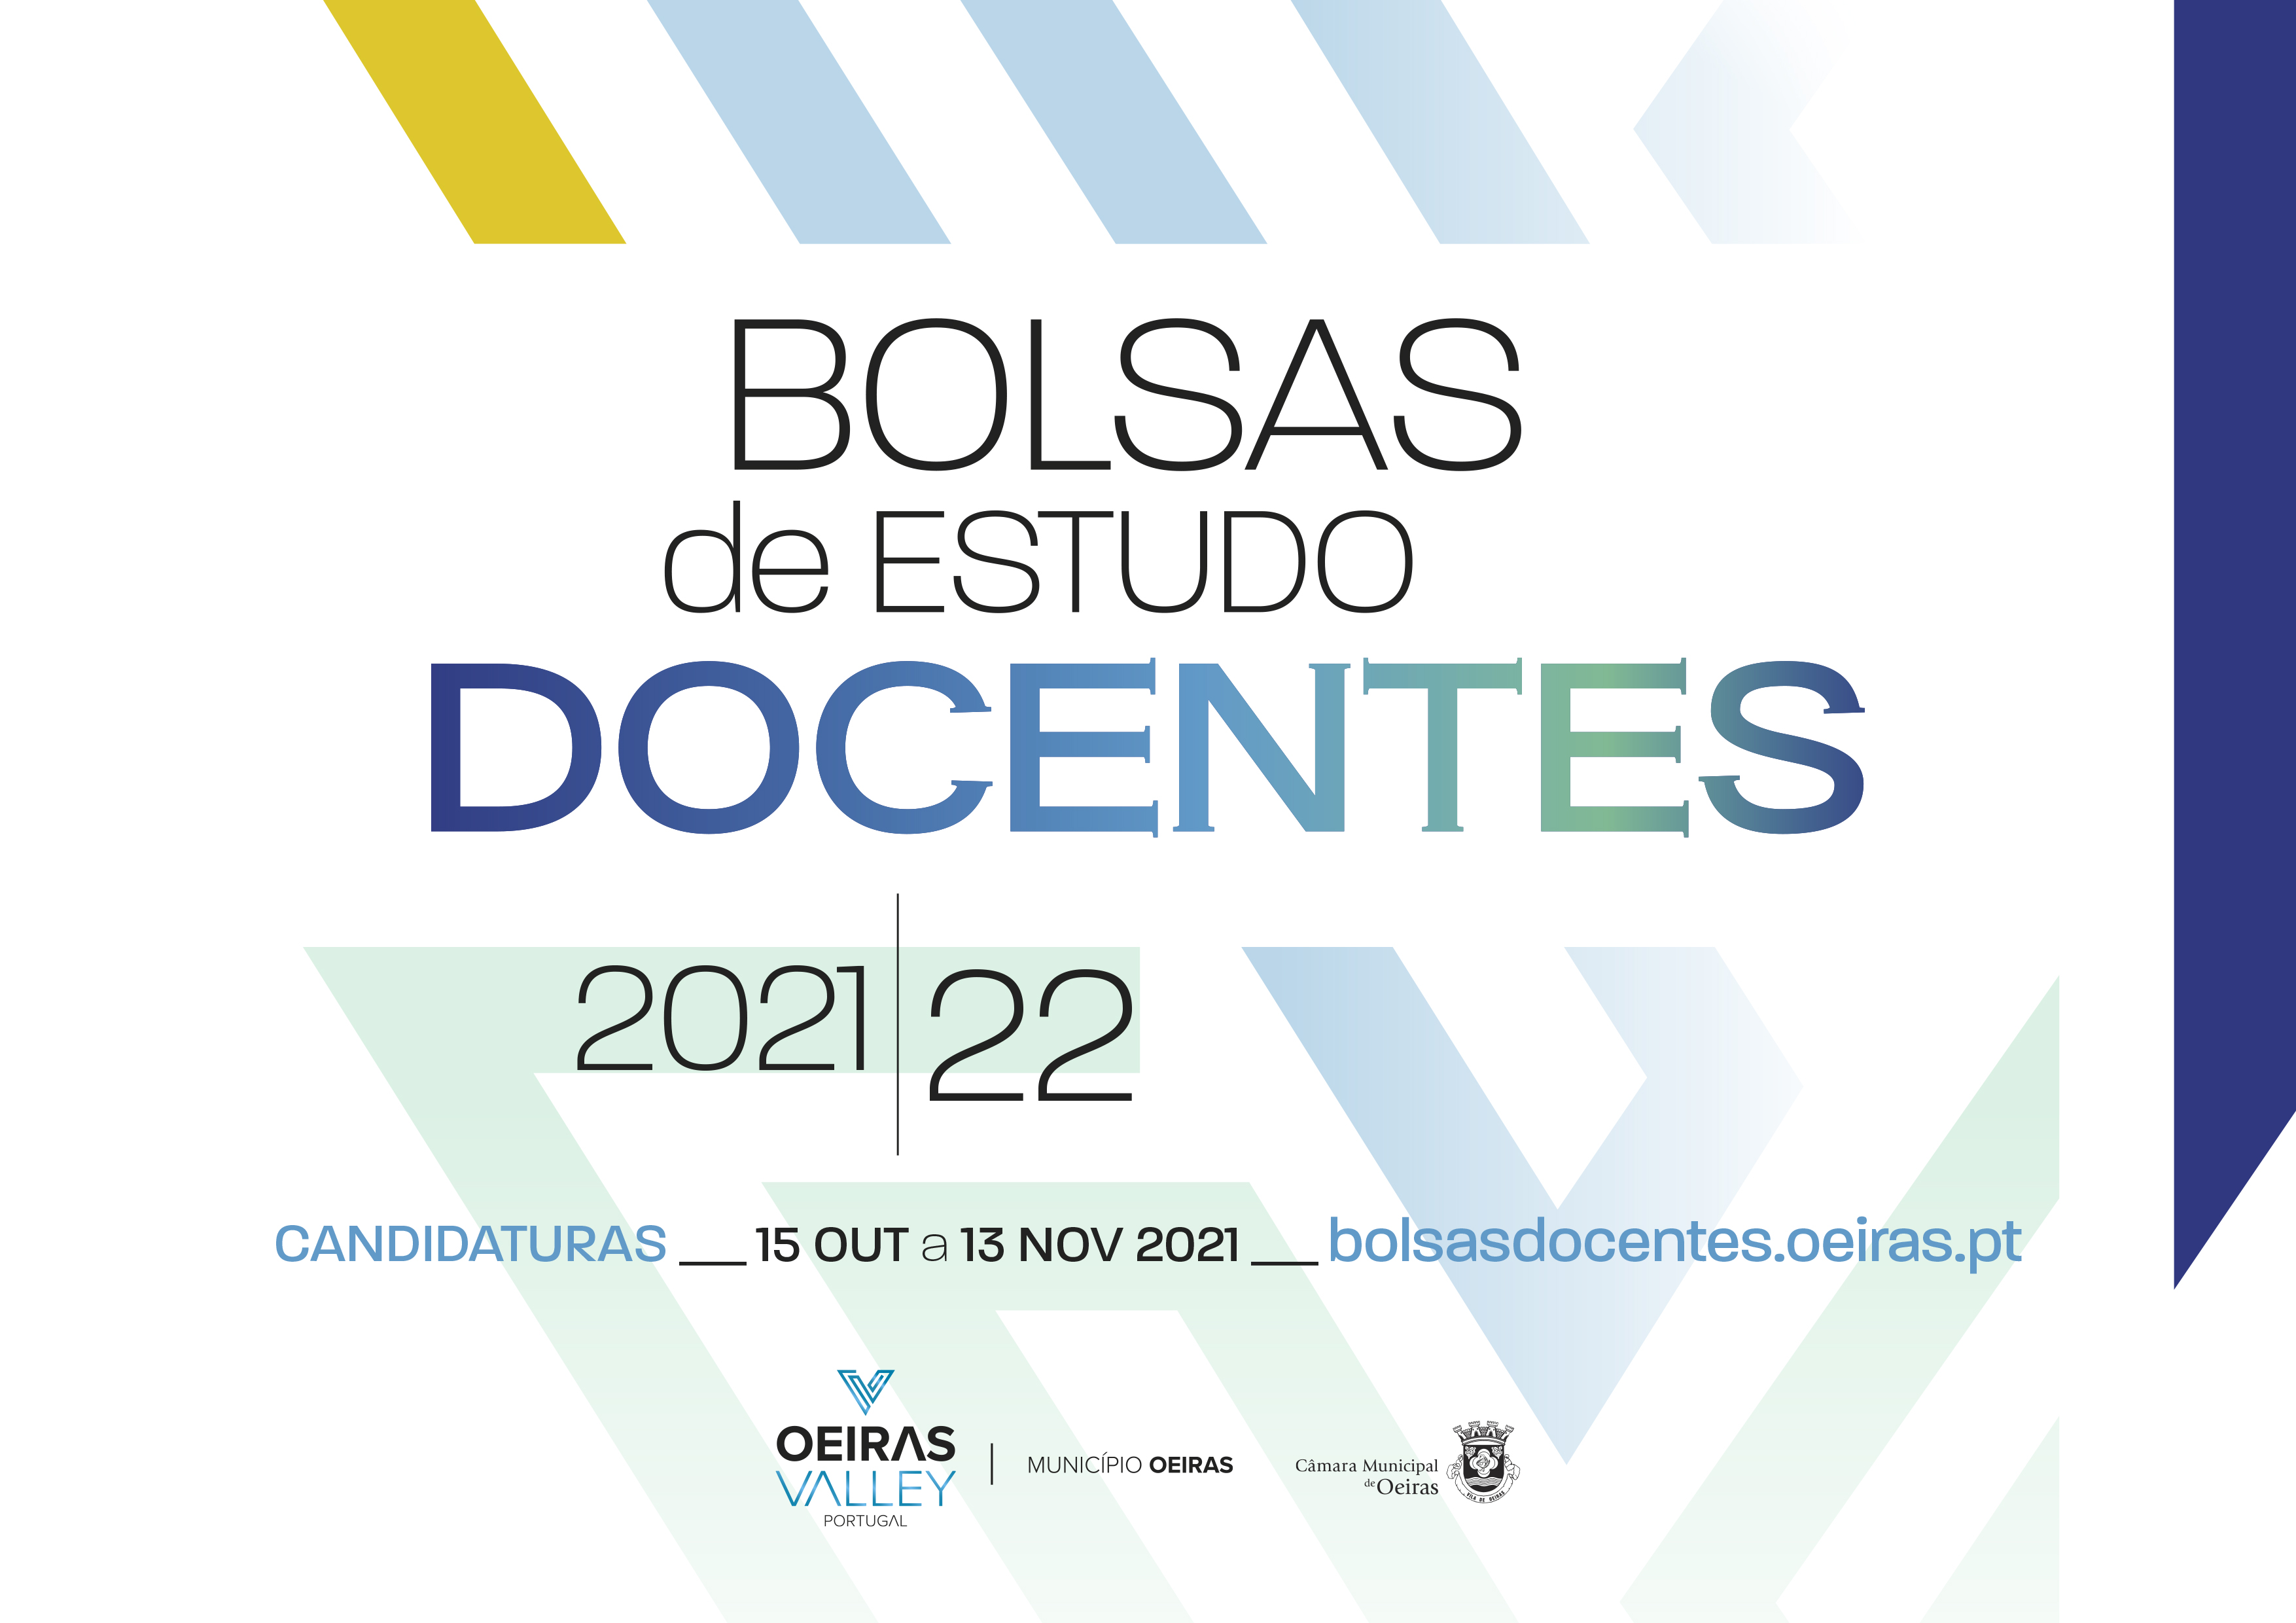 Bolsas de Estudo DOCENTES 2021-2022, Oeiras